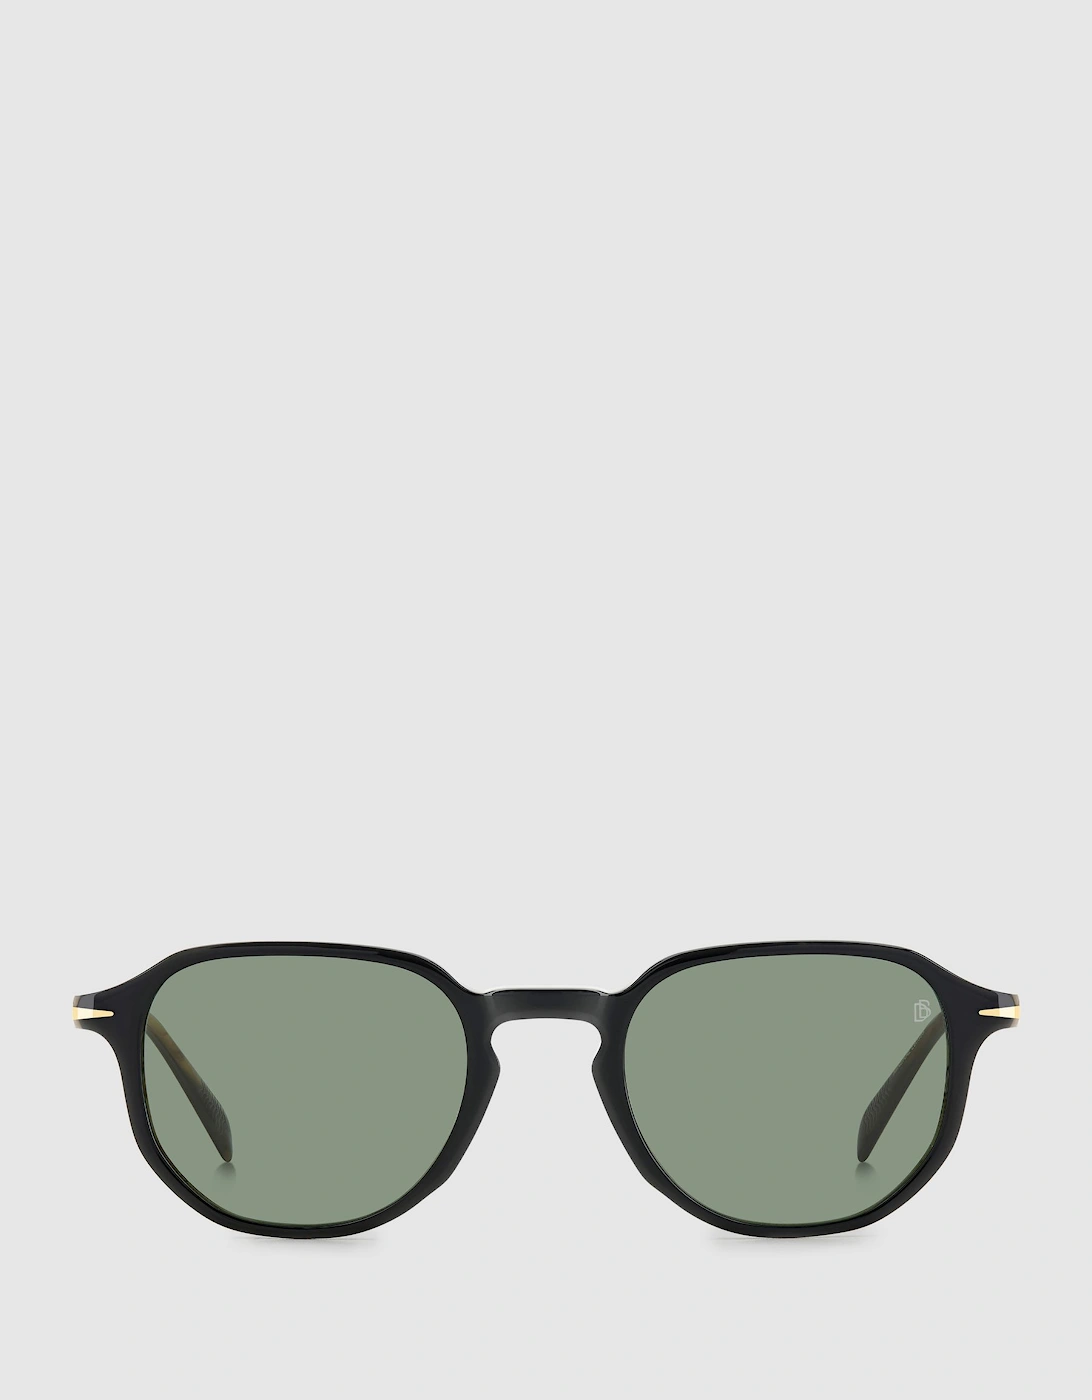 Eyewear by David Beckham Round Sunglasses, 2 of 1